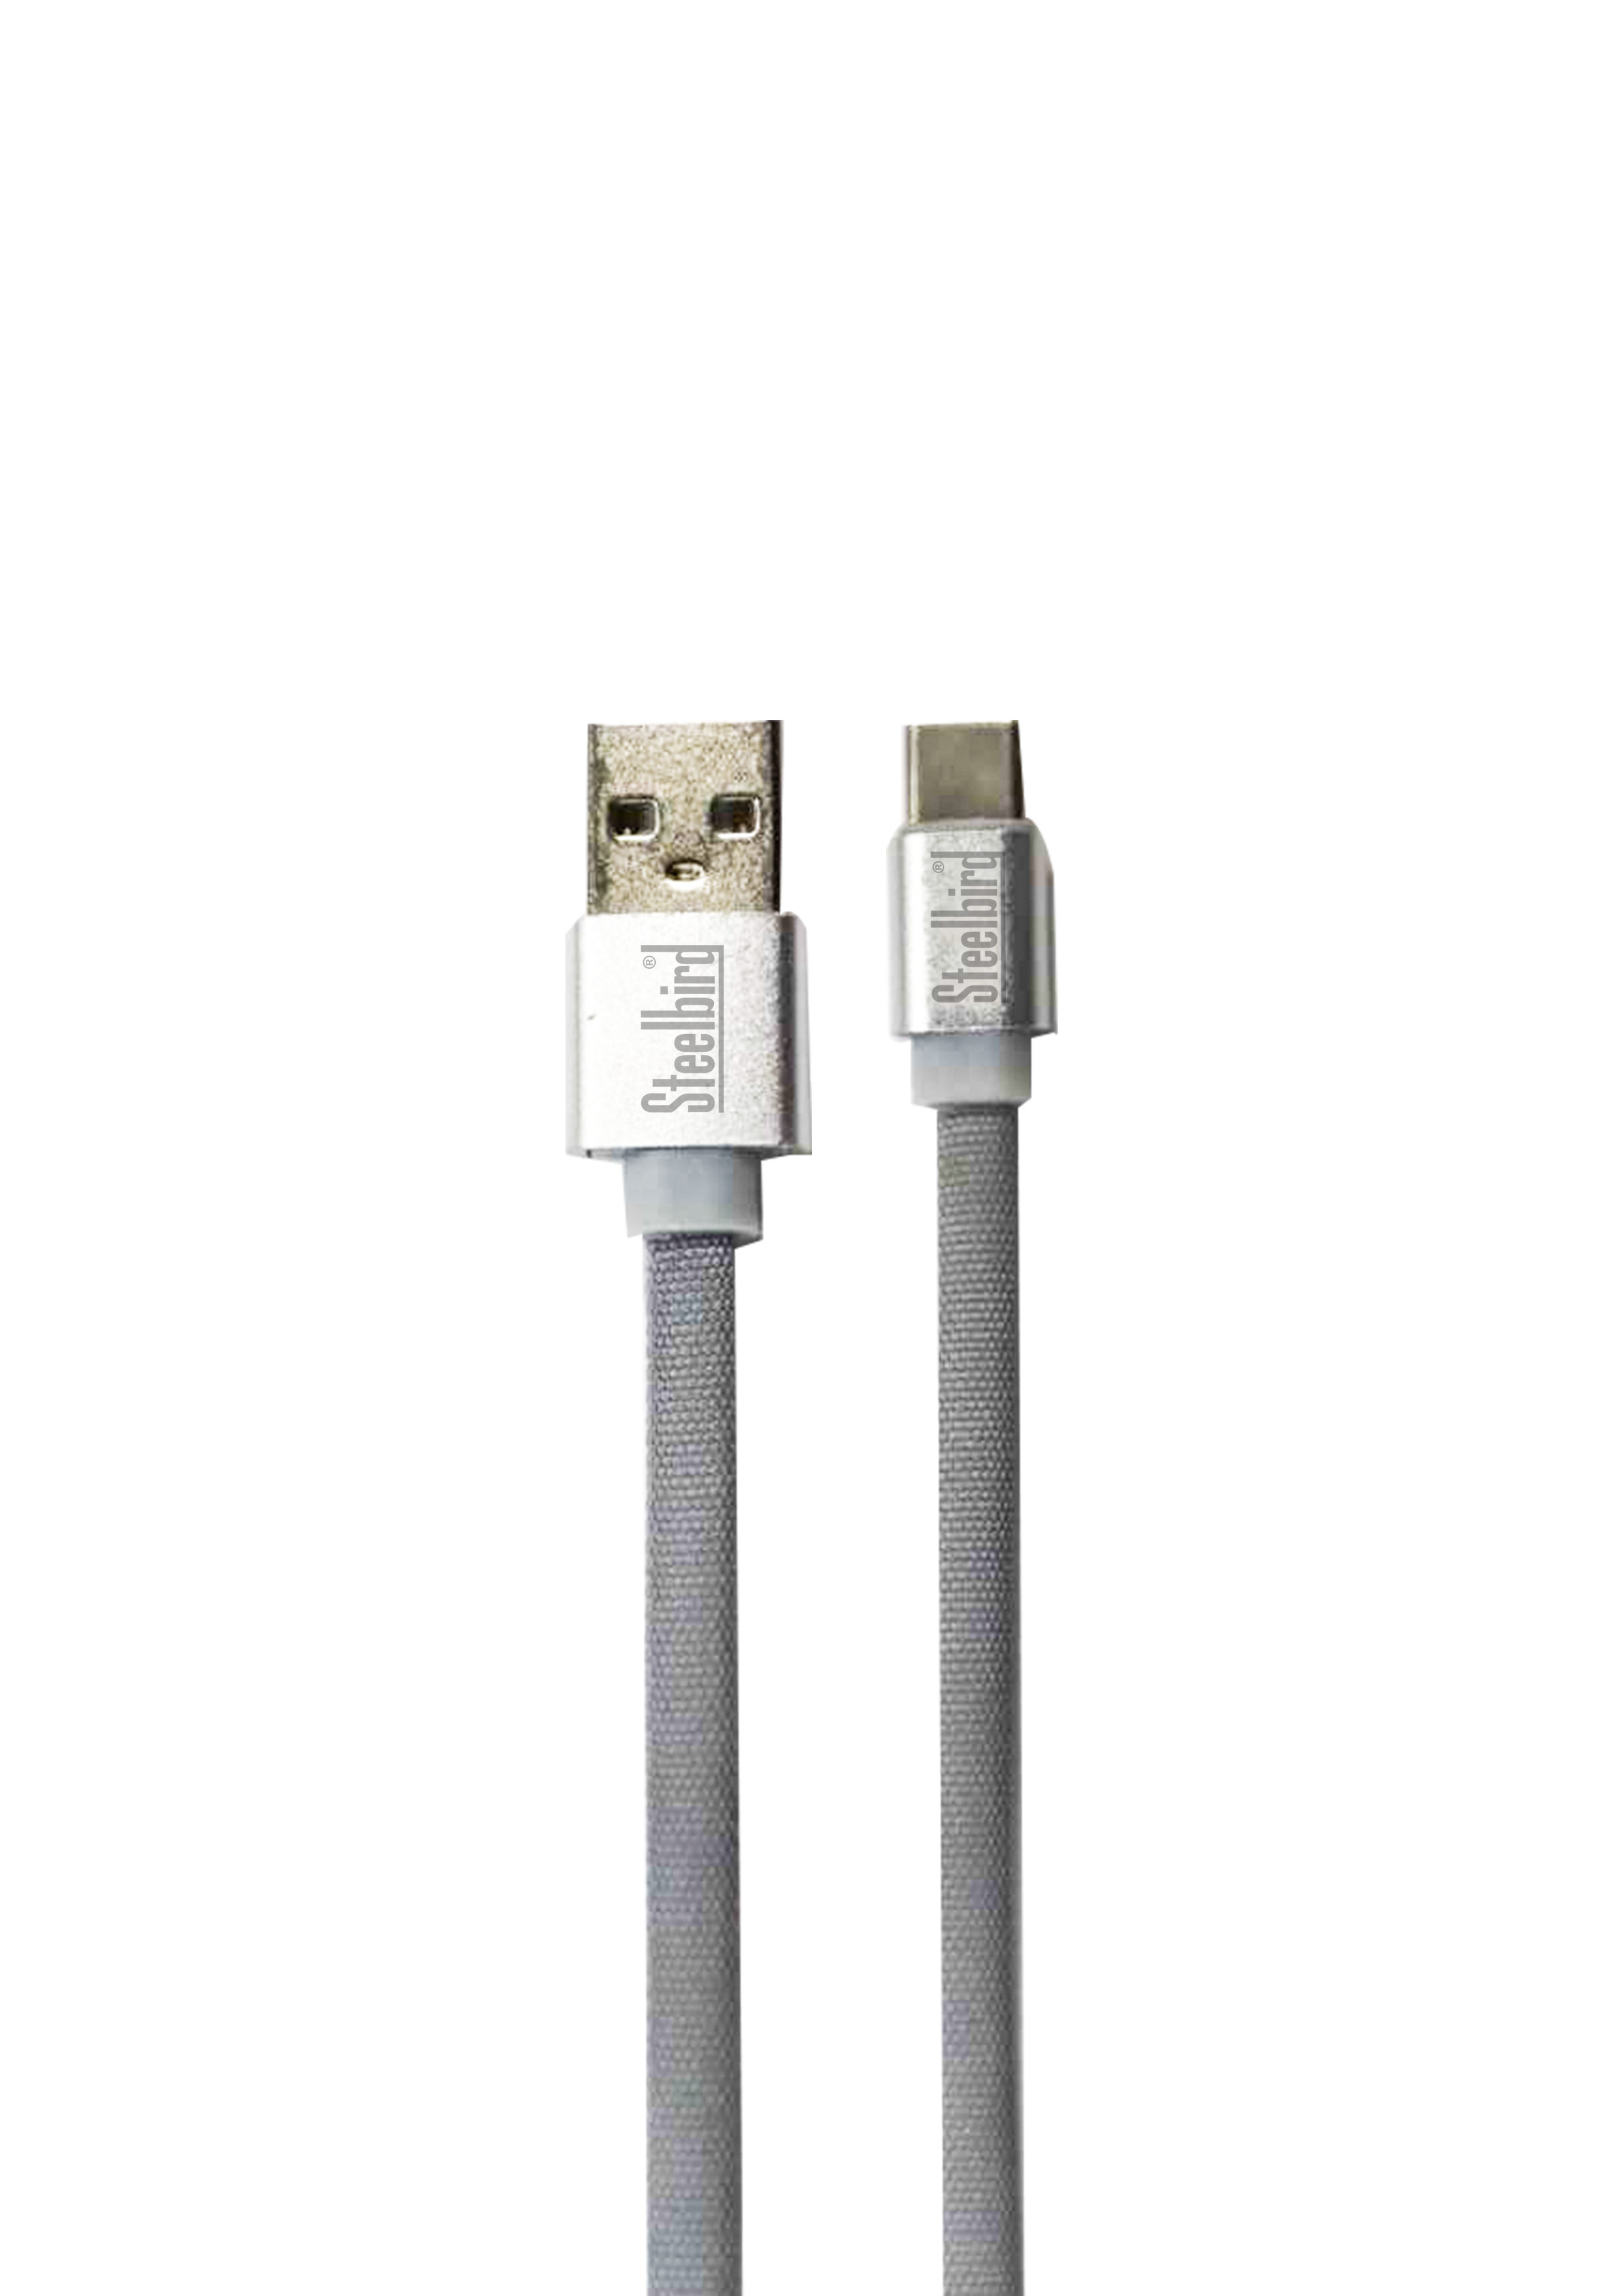 Steelbird USB C Type Nylon Braided Cable